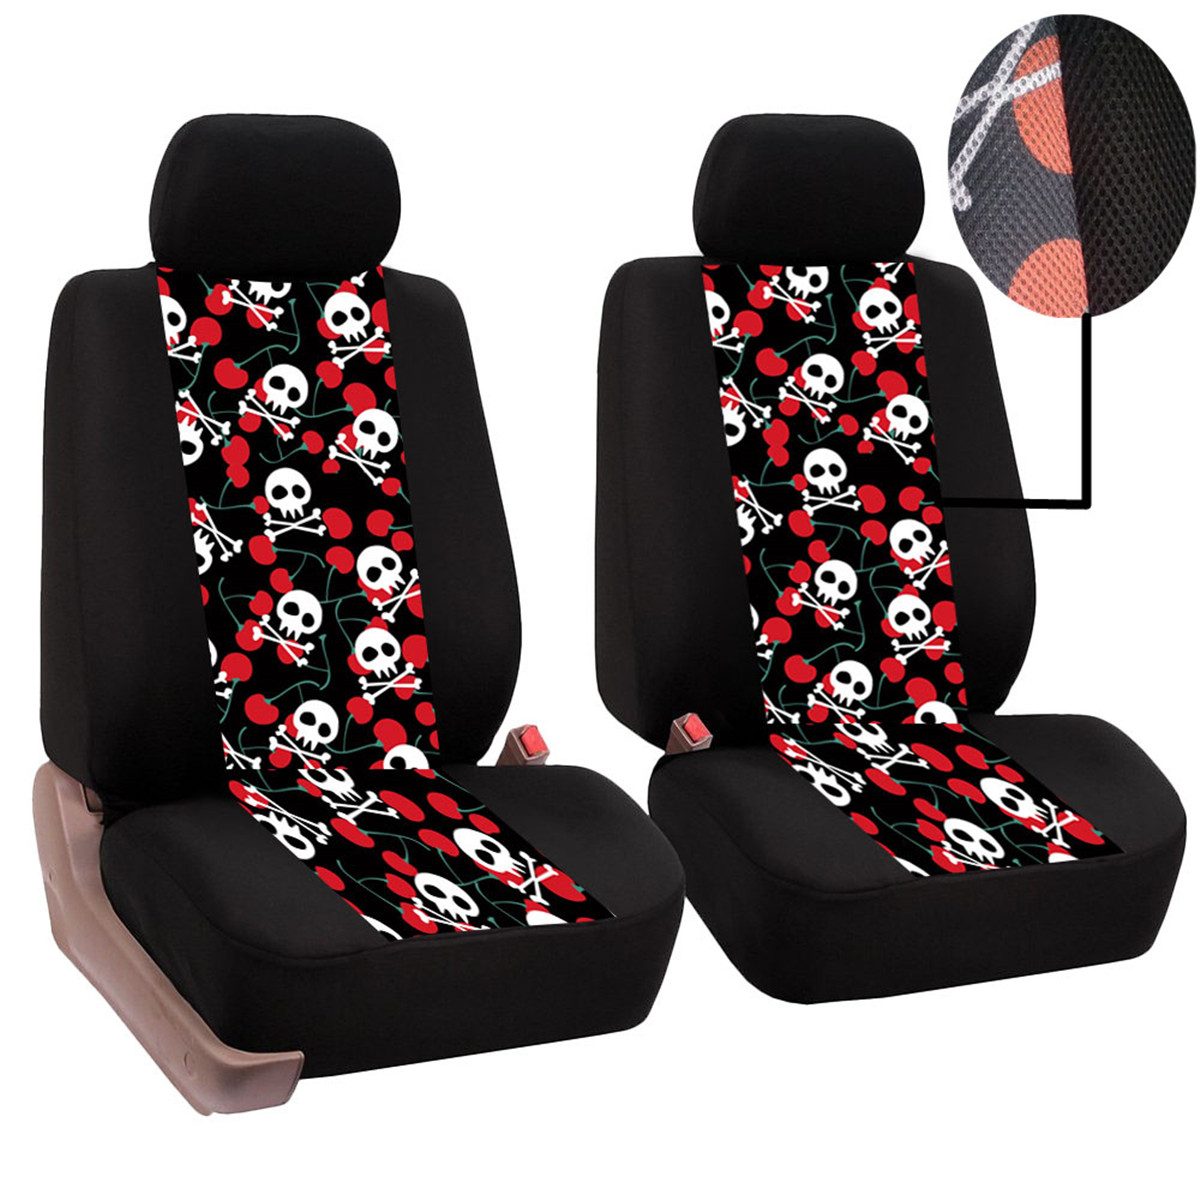 Comfortable Breathable 3D Air Mesh Fabric Full Set Car Seat Cover 8Pcs/Set